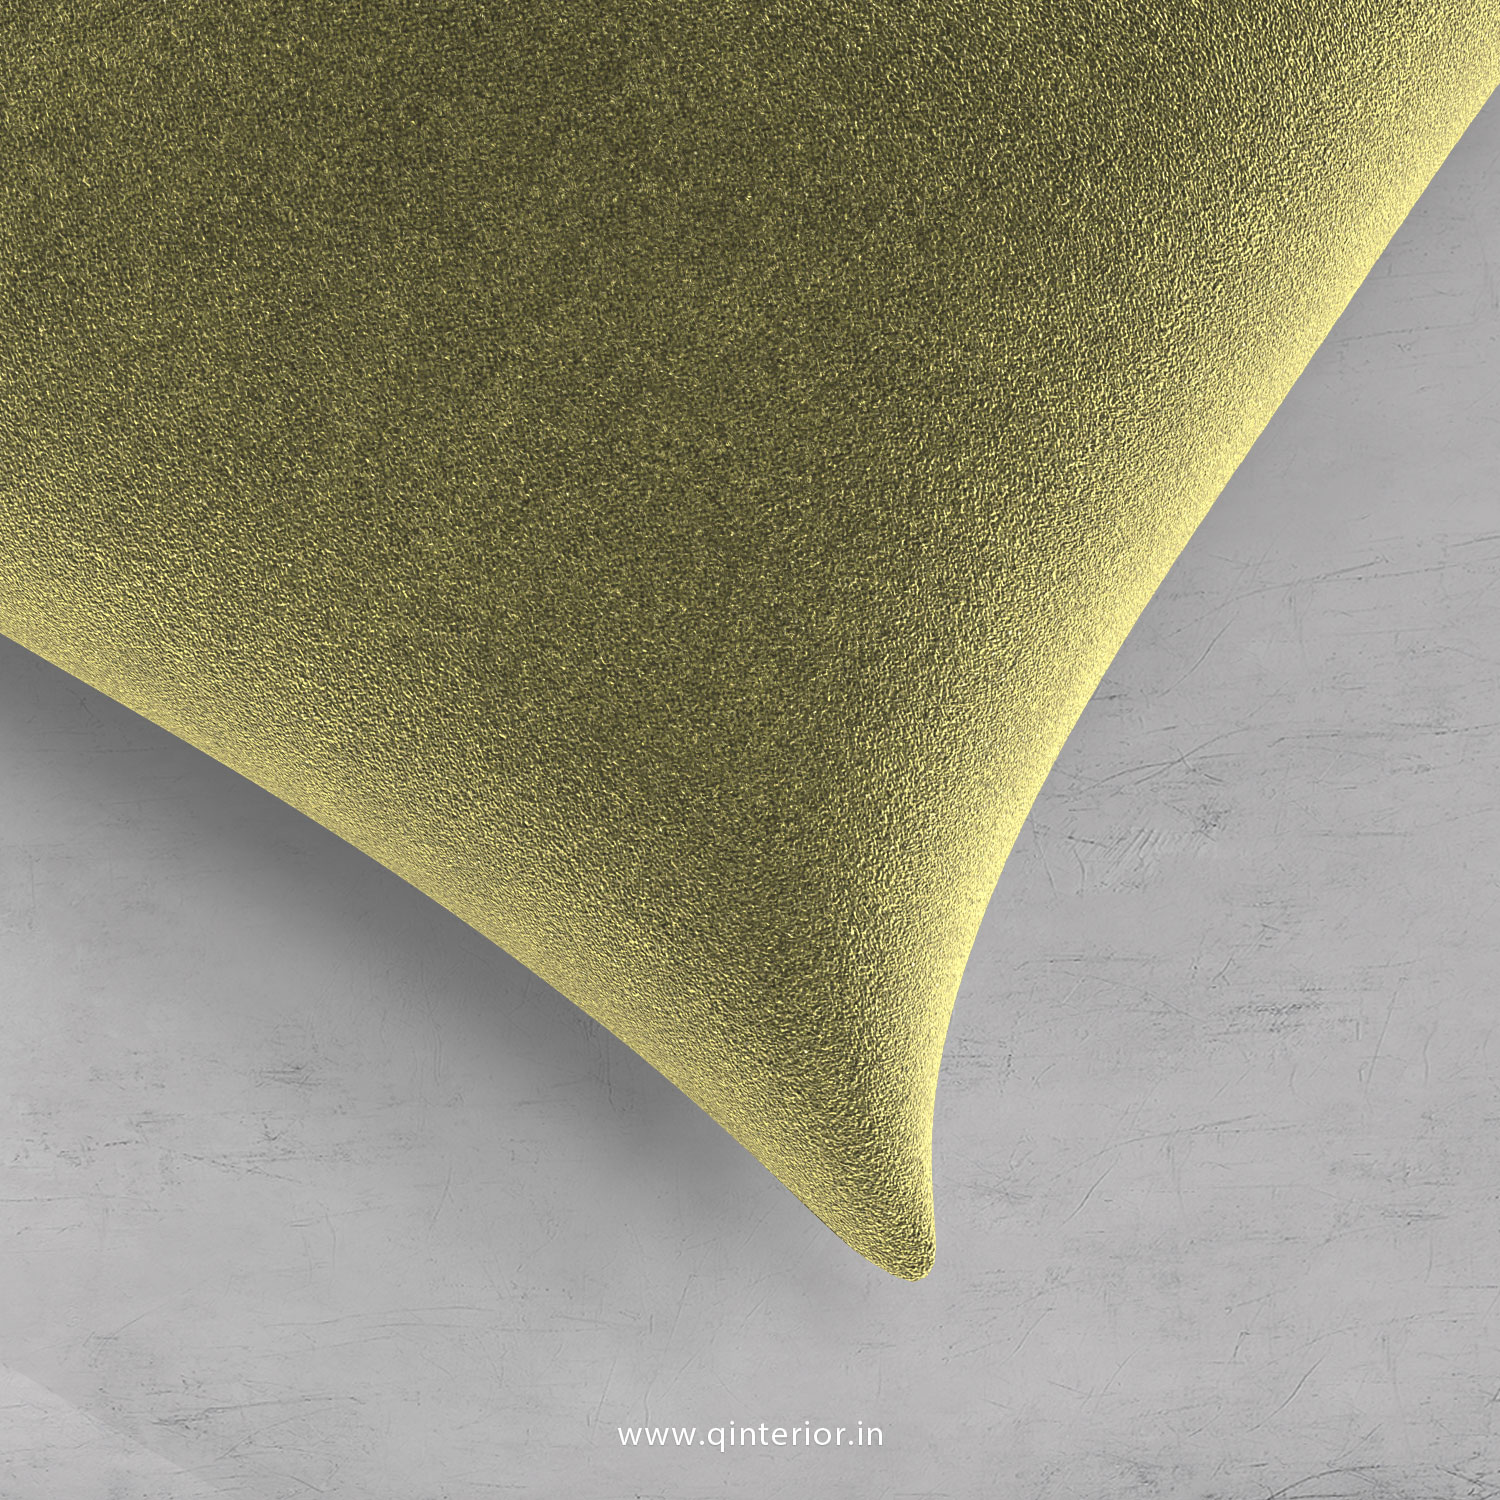 Cushion With Cushion Cover in Velvet Fabric - CUS002 VL04